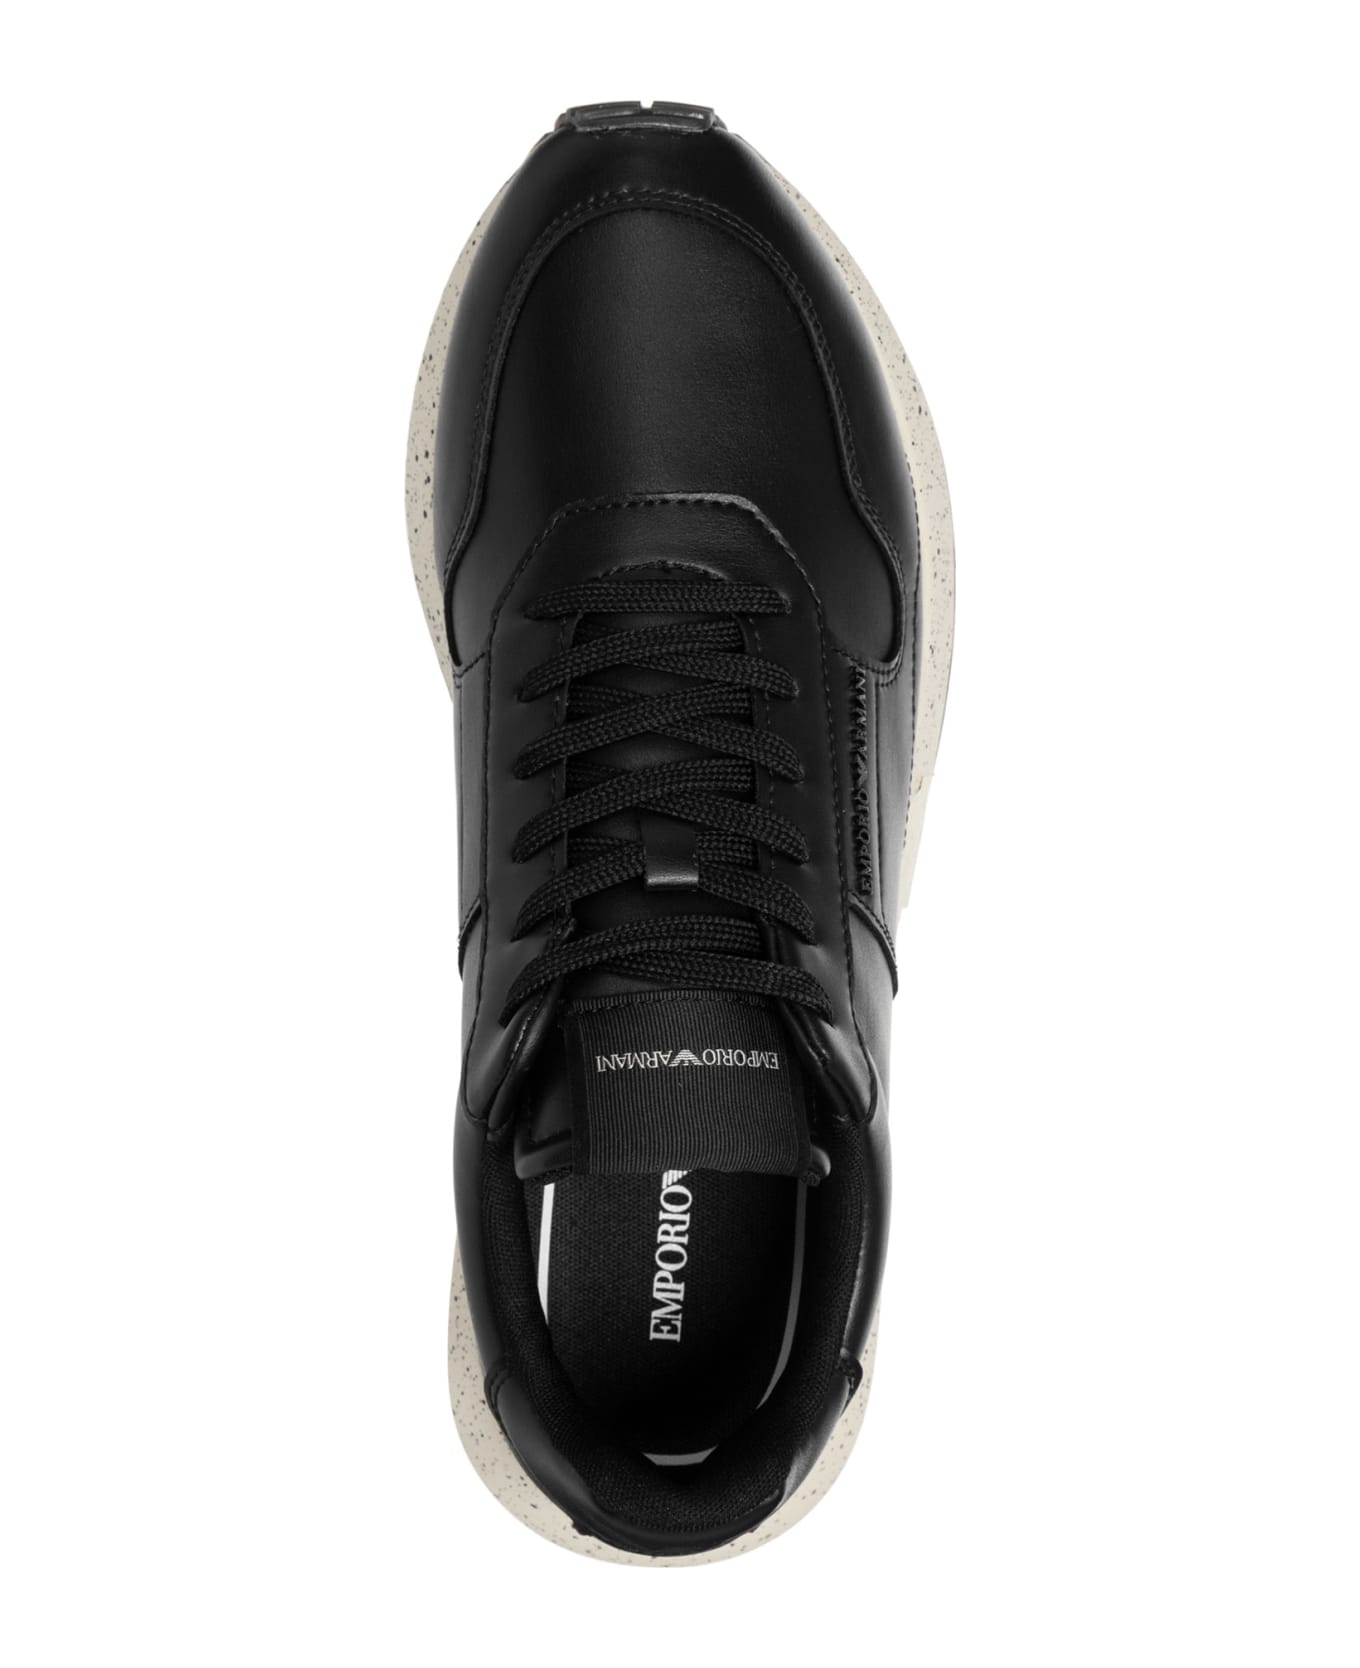 Emporio Armani Leather Sneakers - black スニーカー